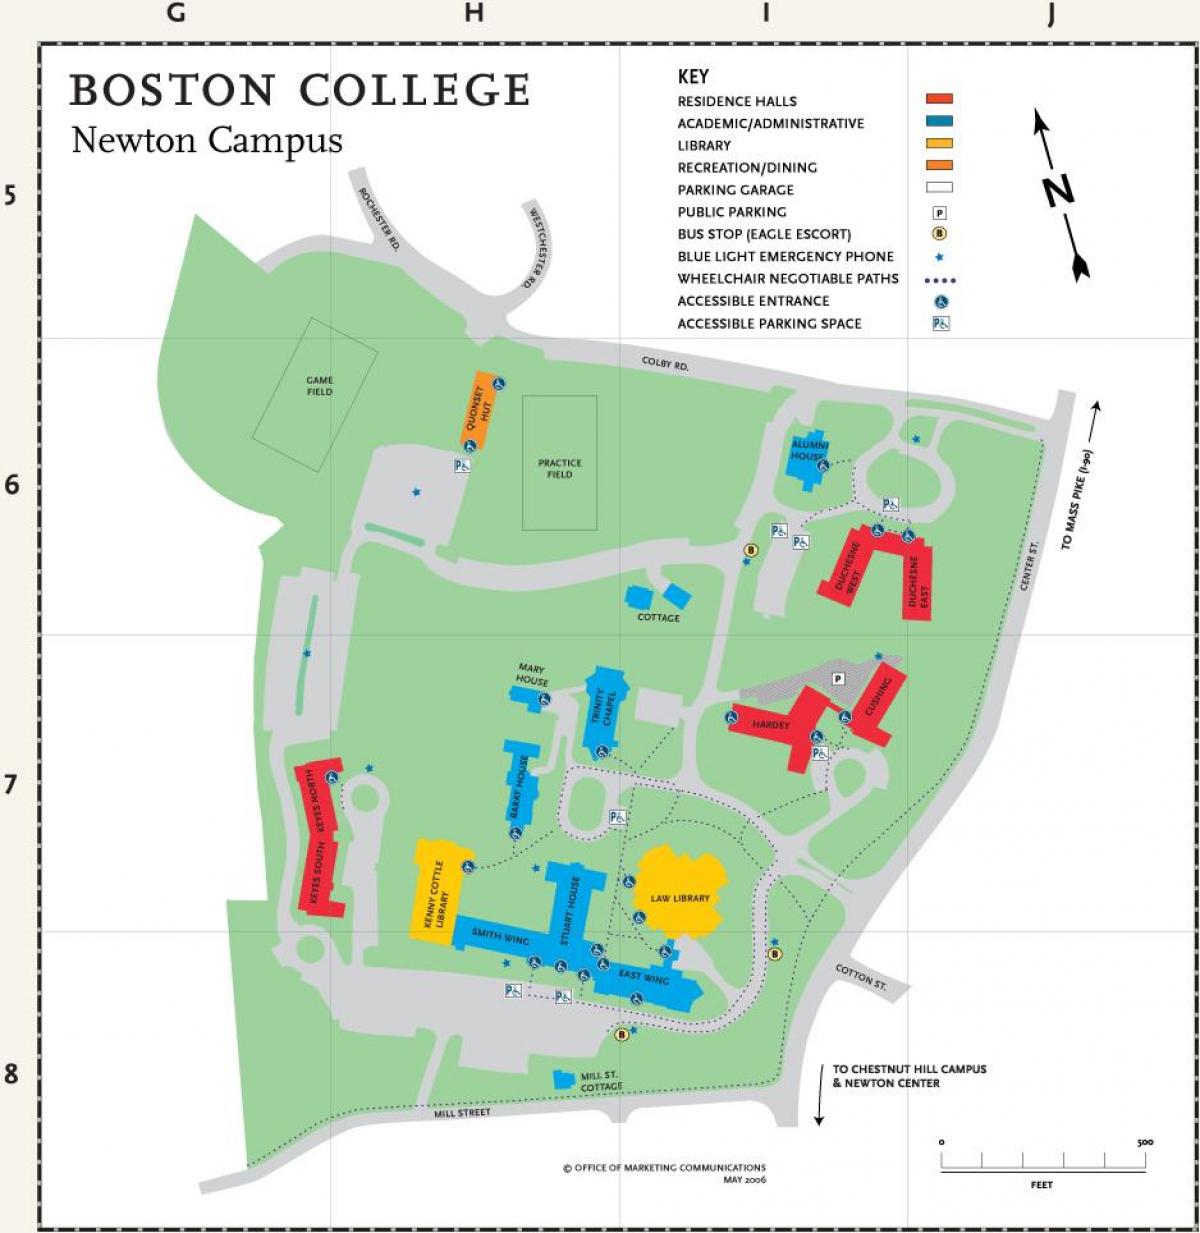 kort over Boston college